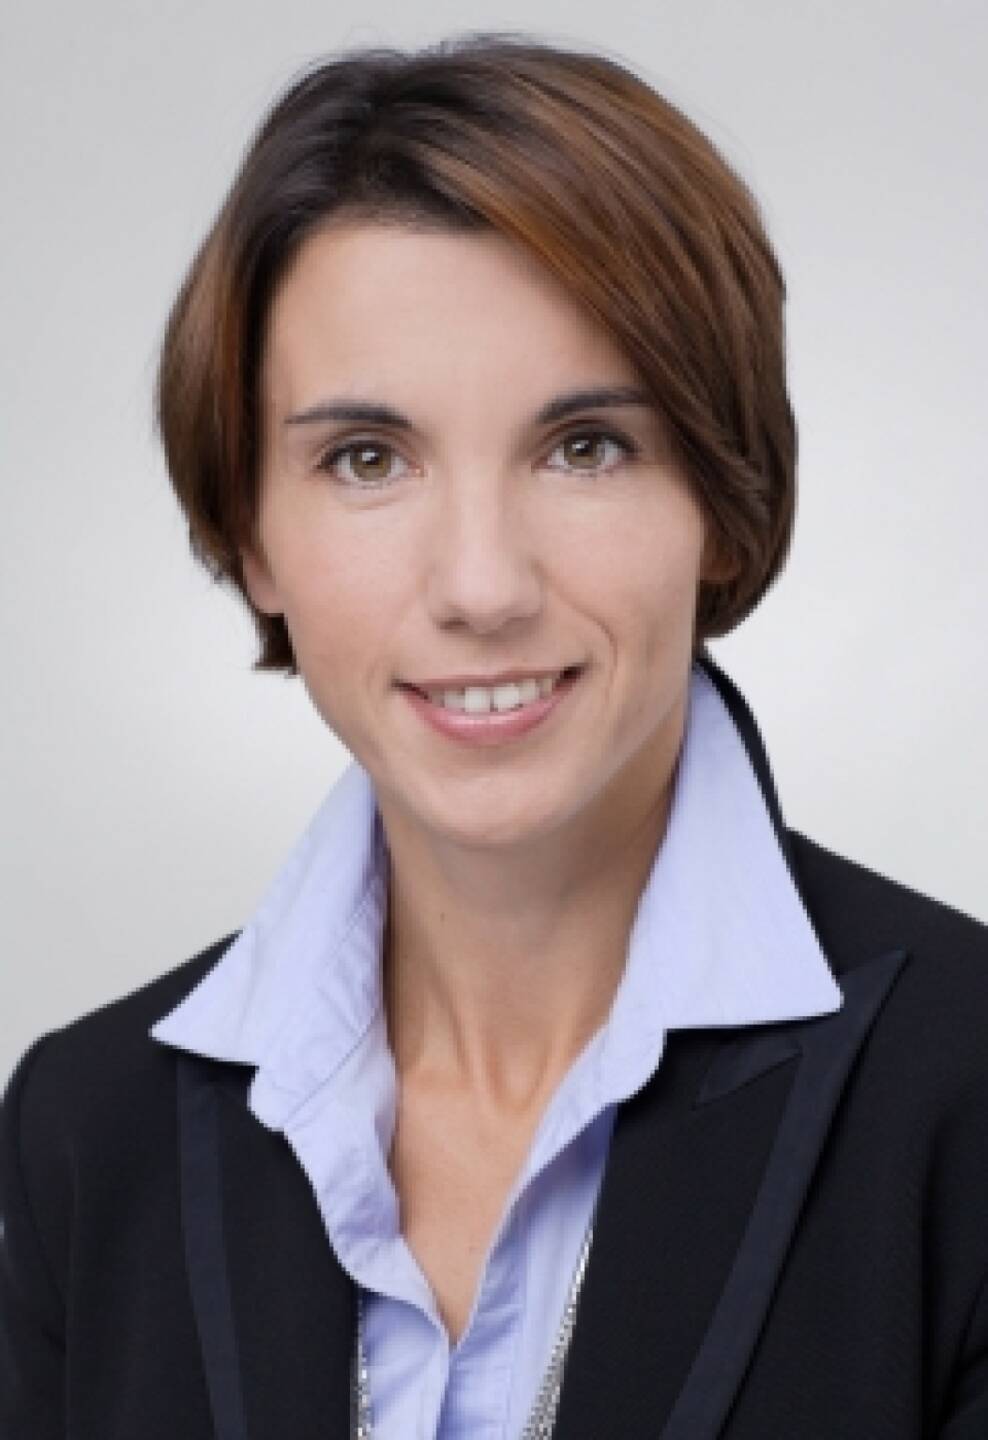 Alexandra Baldessarini, Volksbank Investments (4.Jänner), finanzmarktfoto.at wünscht alles Gute!